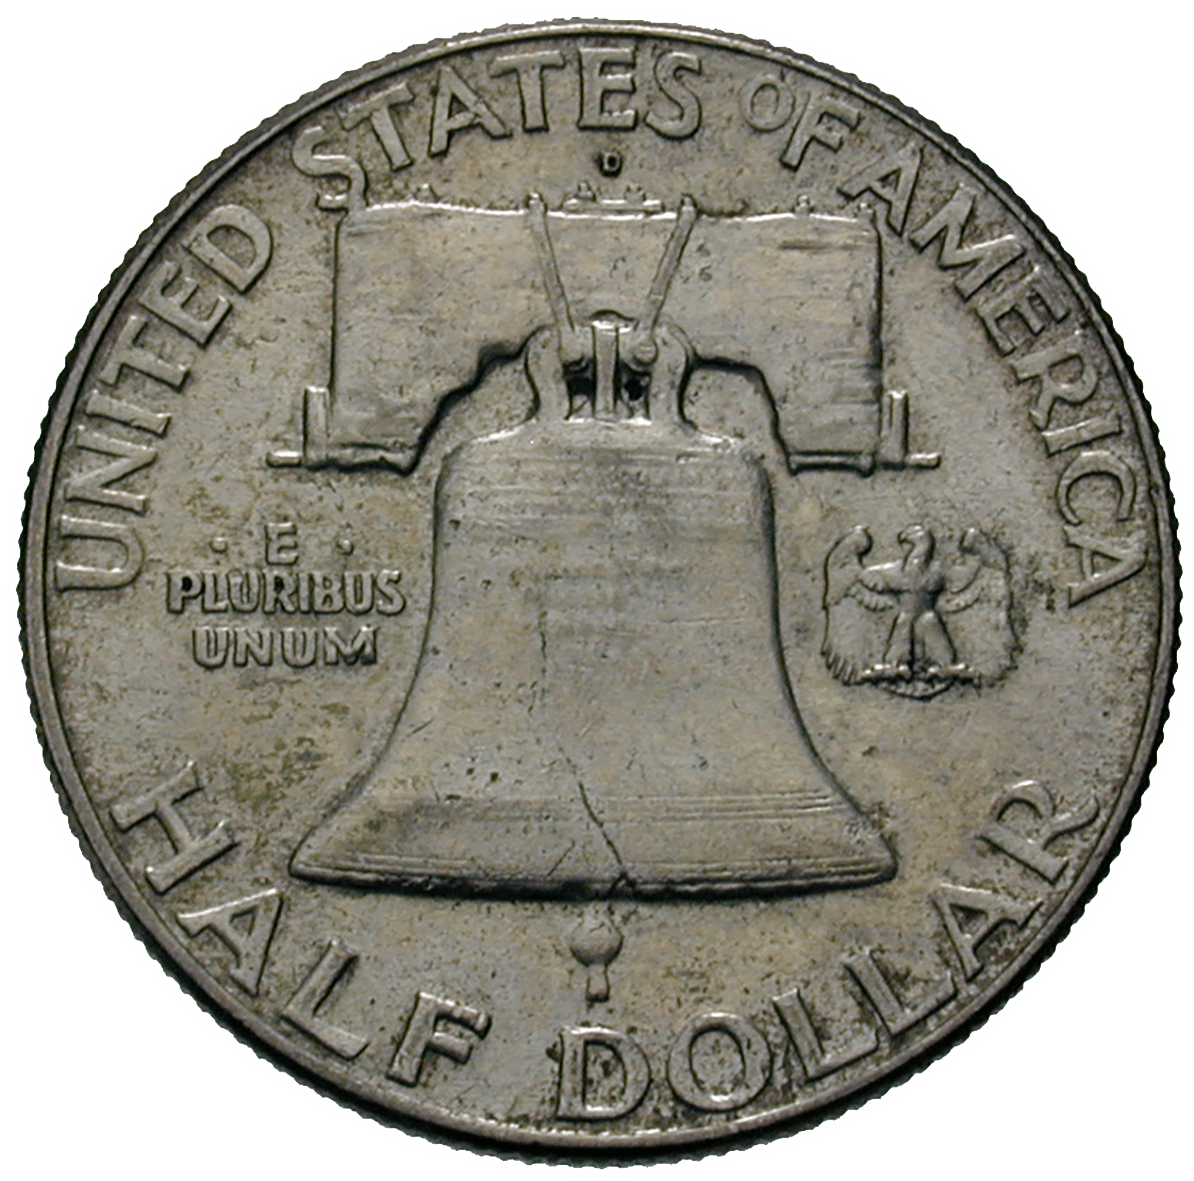 United States of America, Half Dollar 1963 (reverse)